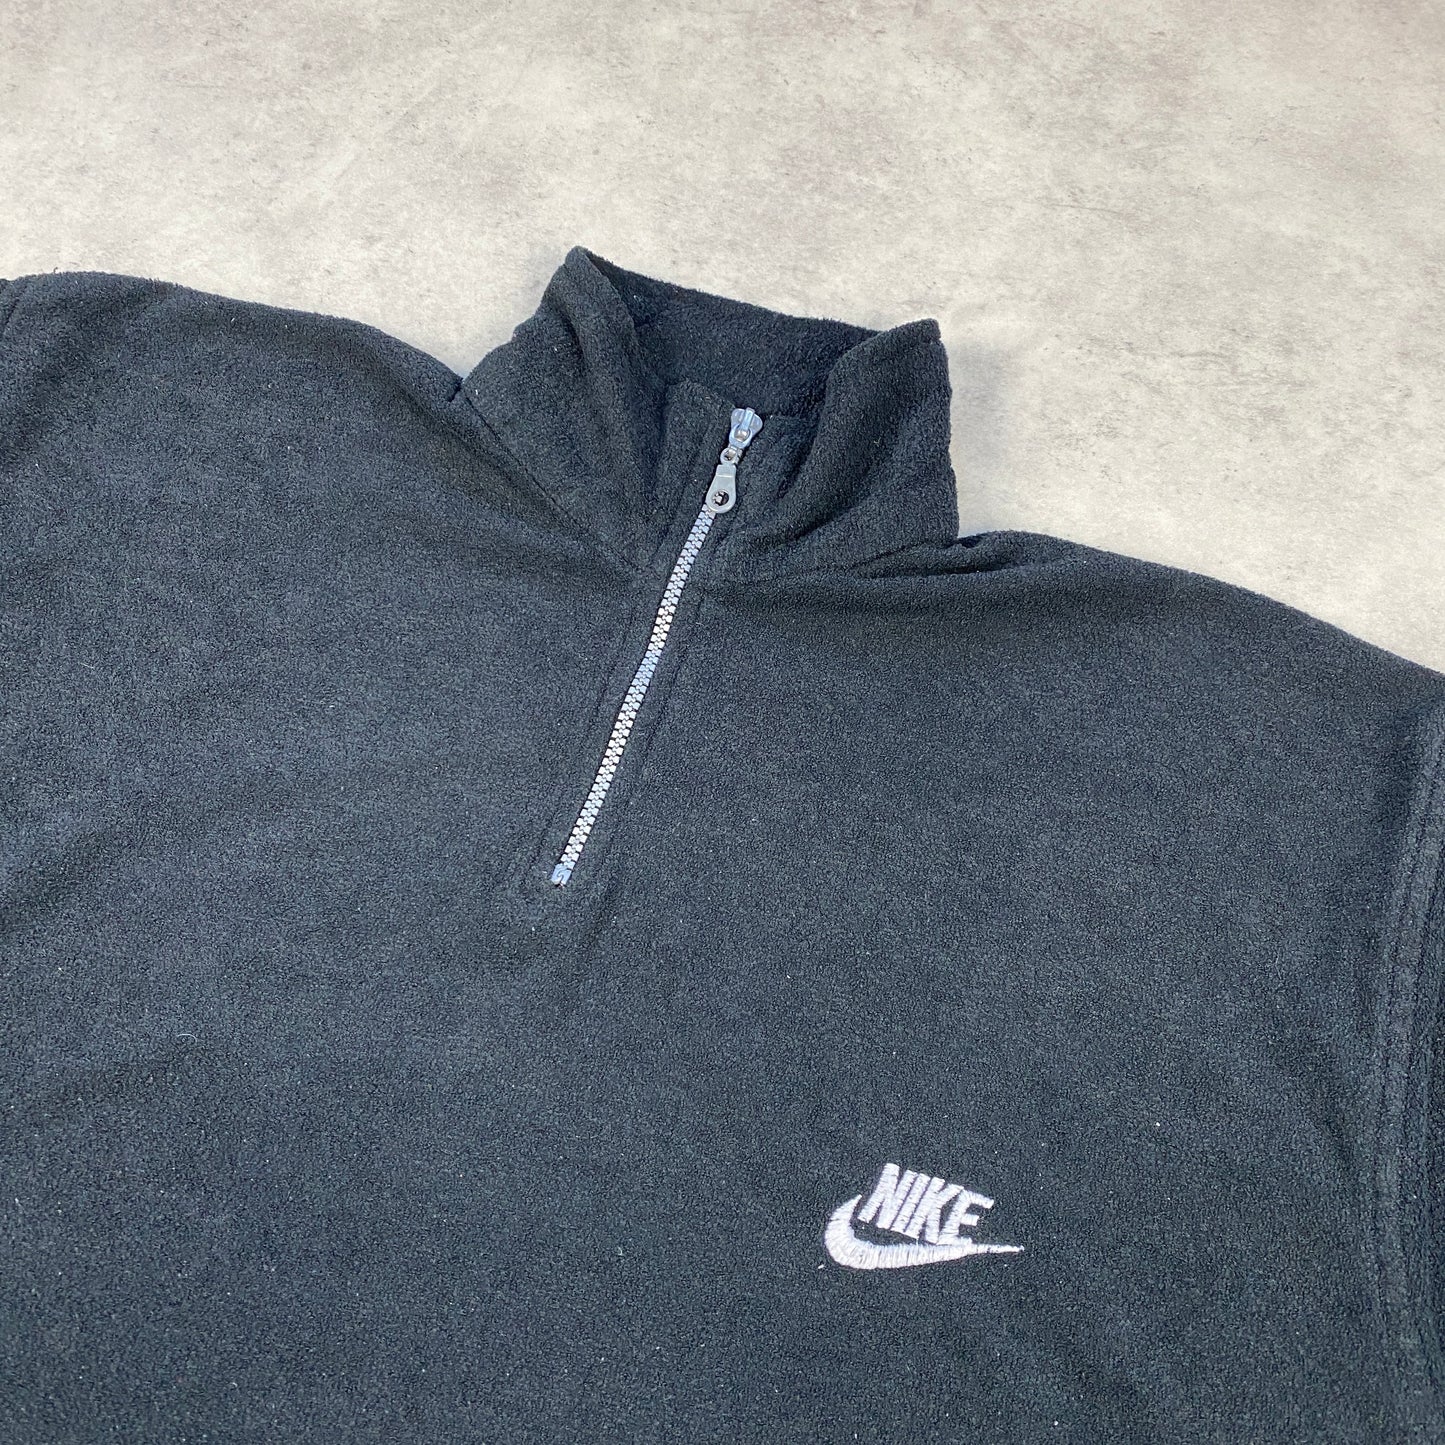 Nike RARE 1/4 zip fleece sweater (L)